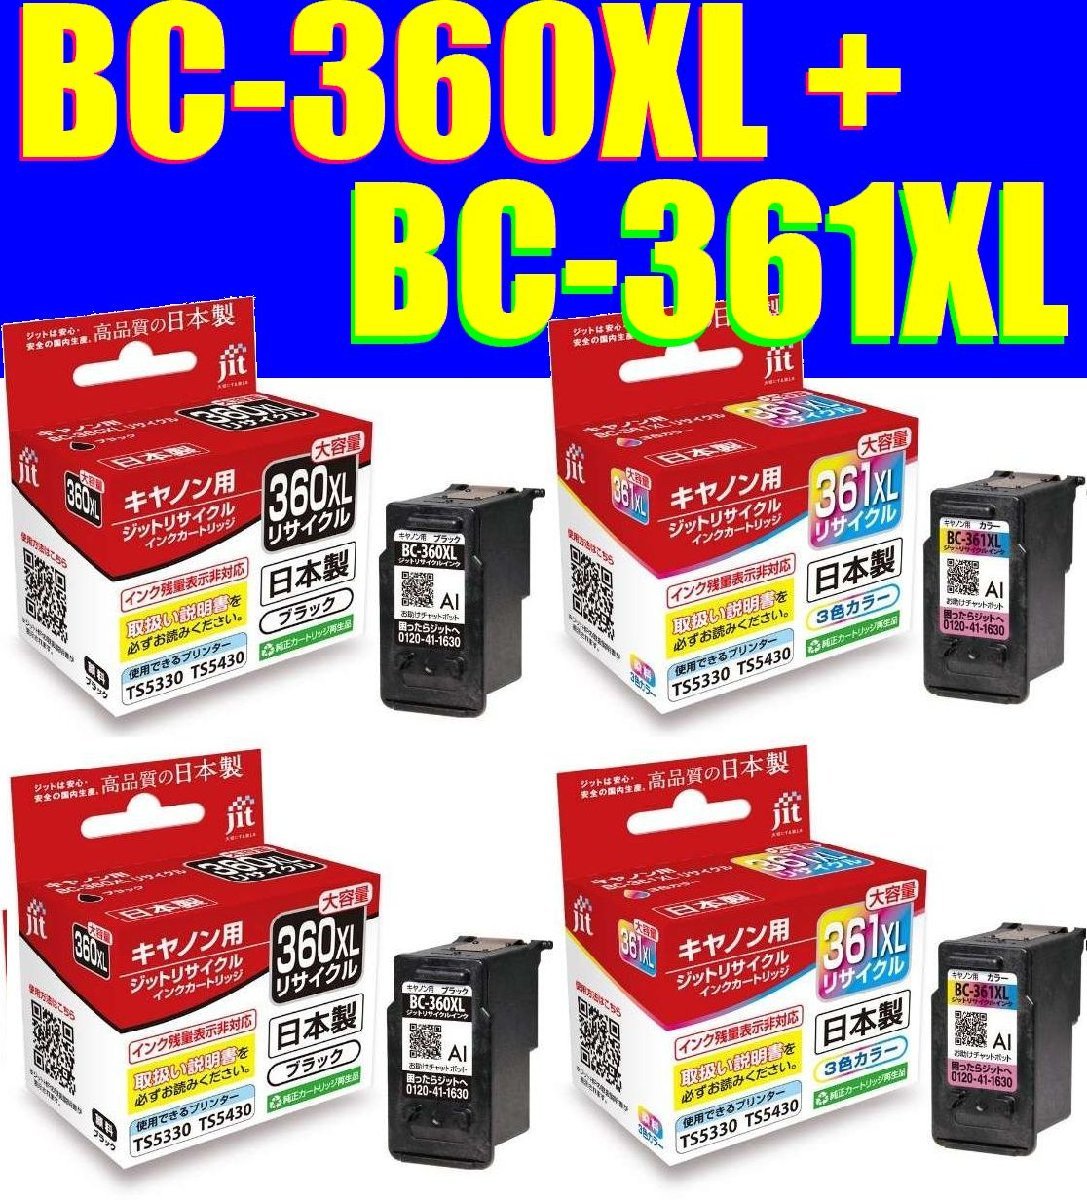 BC-360XL BC-361XL ブラック+3色カラーインク 増量版 4個セット 日本製 TS5430 TS5330 大容量 キャノン対応 Black & Tri-color 再生インク_画像1